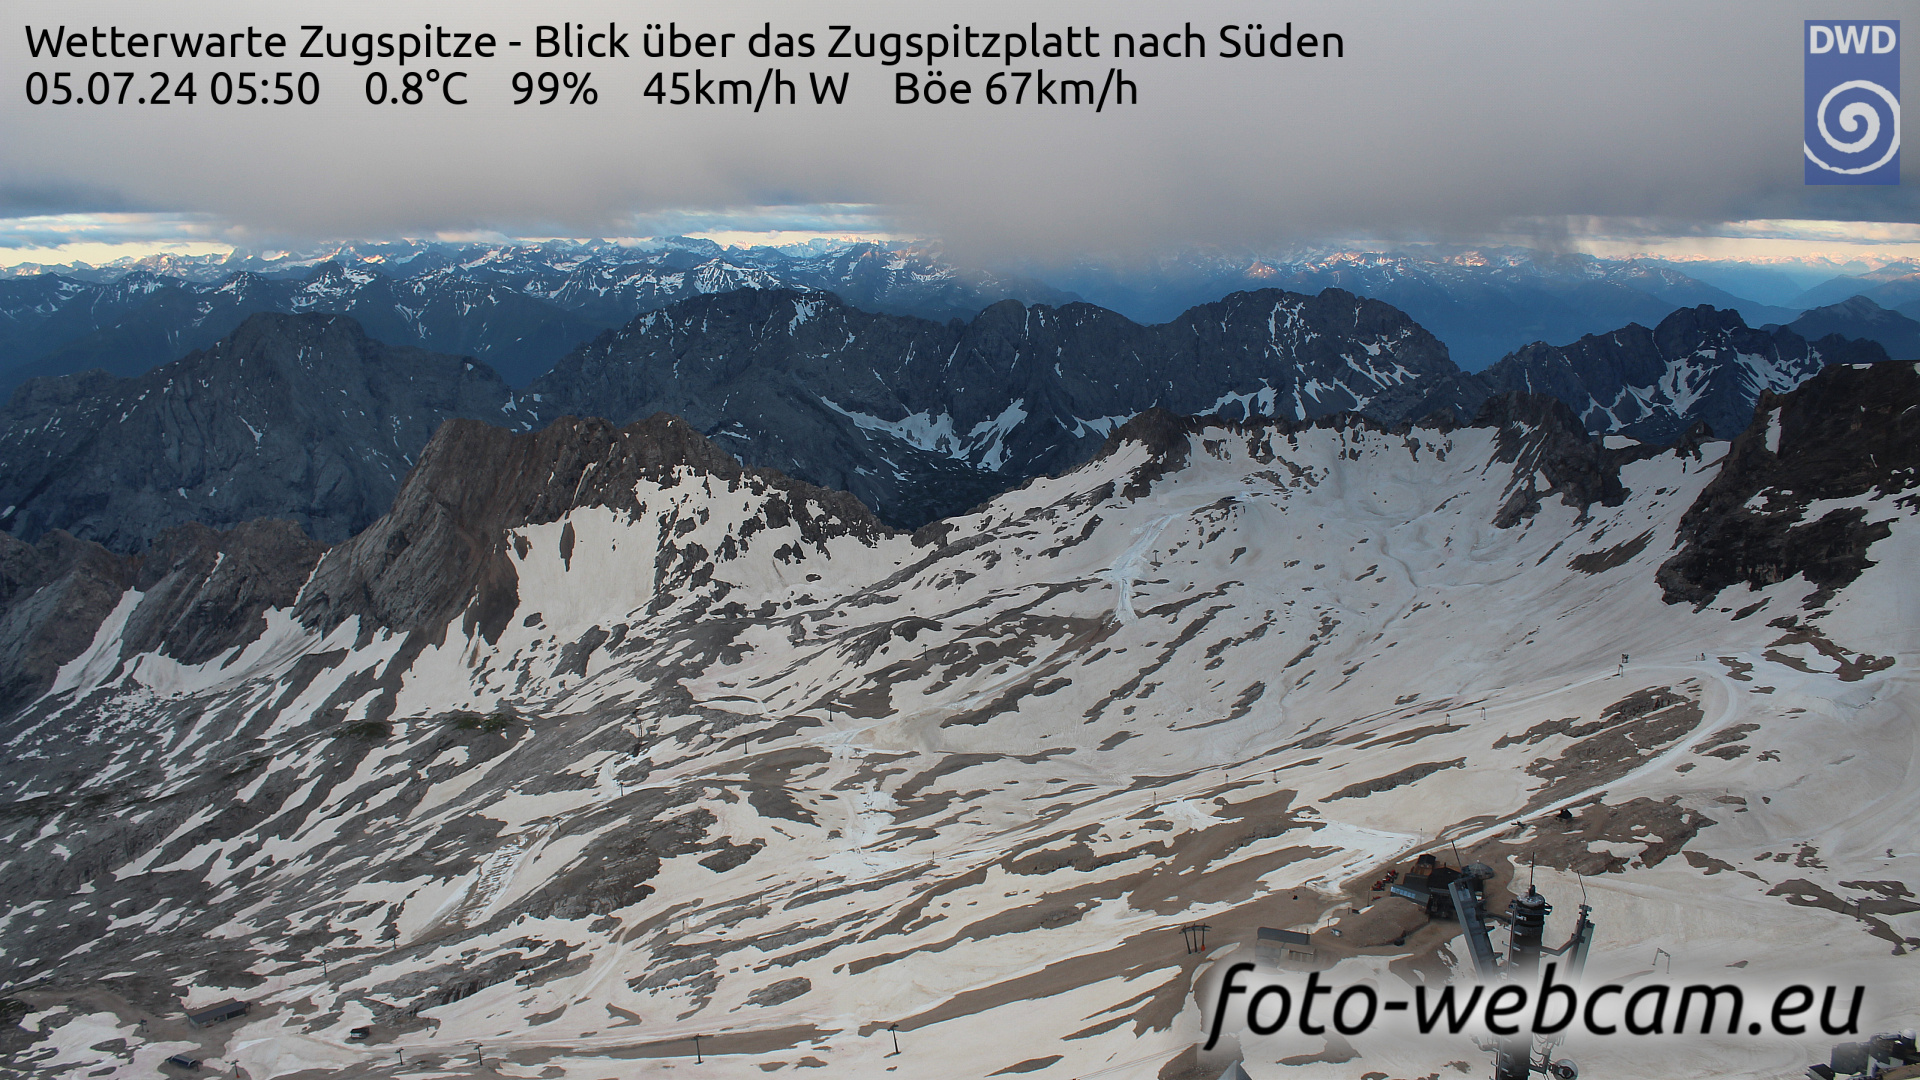 Zugspitze Thu. 05:54